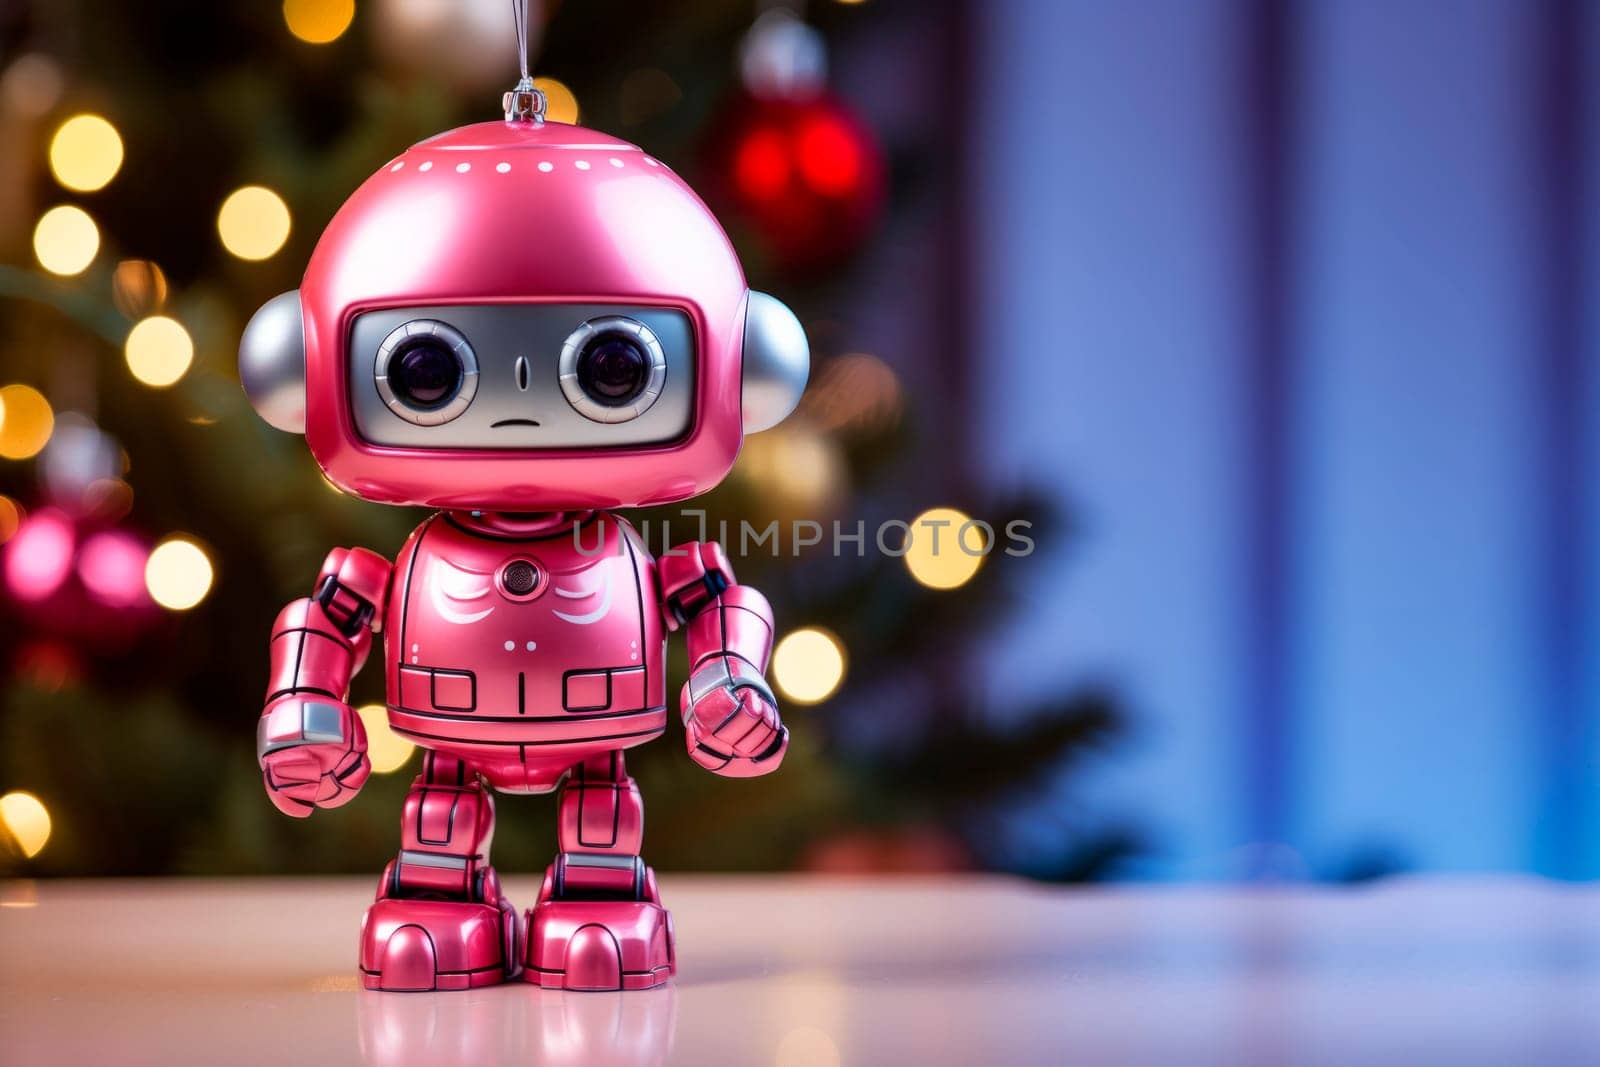 a New Year's toy in the form of a robot on a Christmas background. Copy space. by Spirina